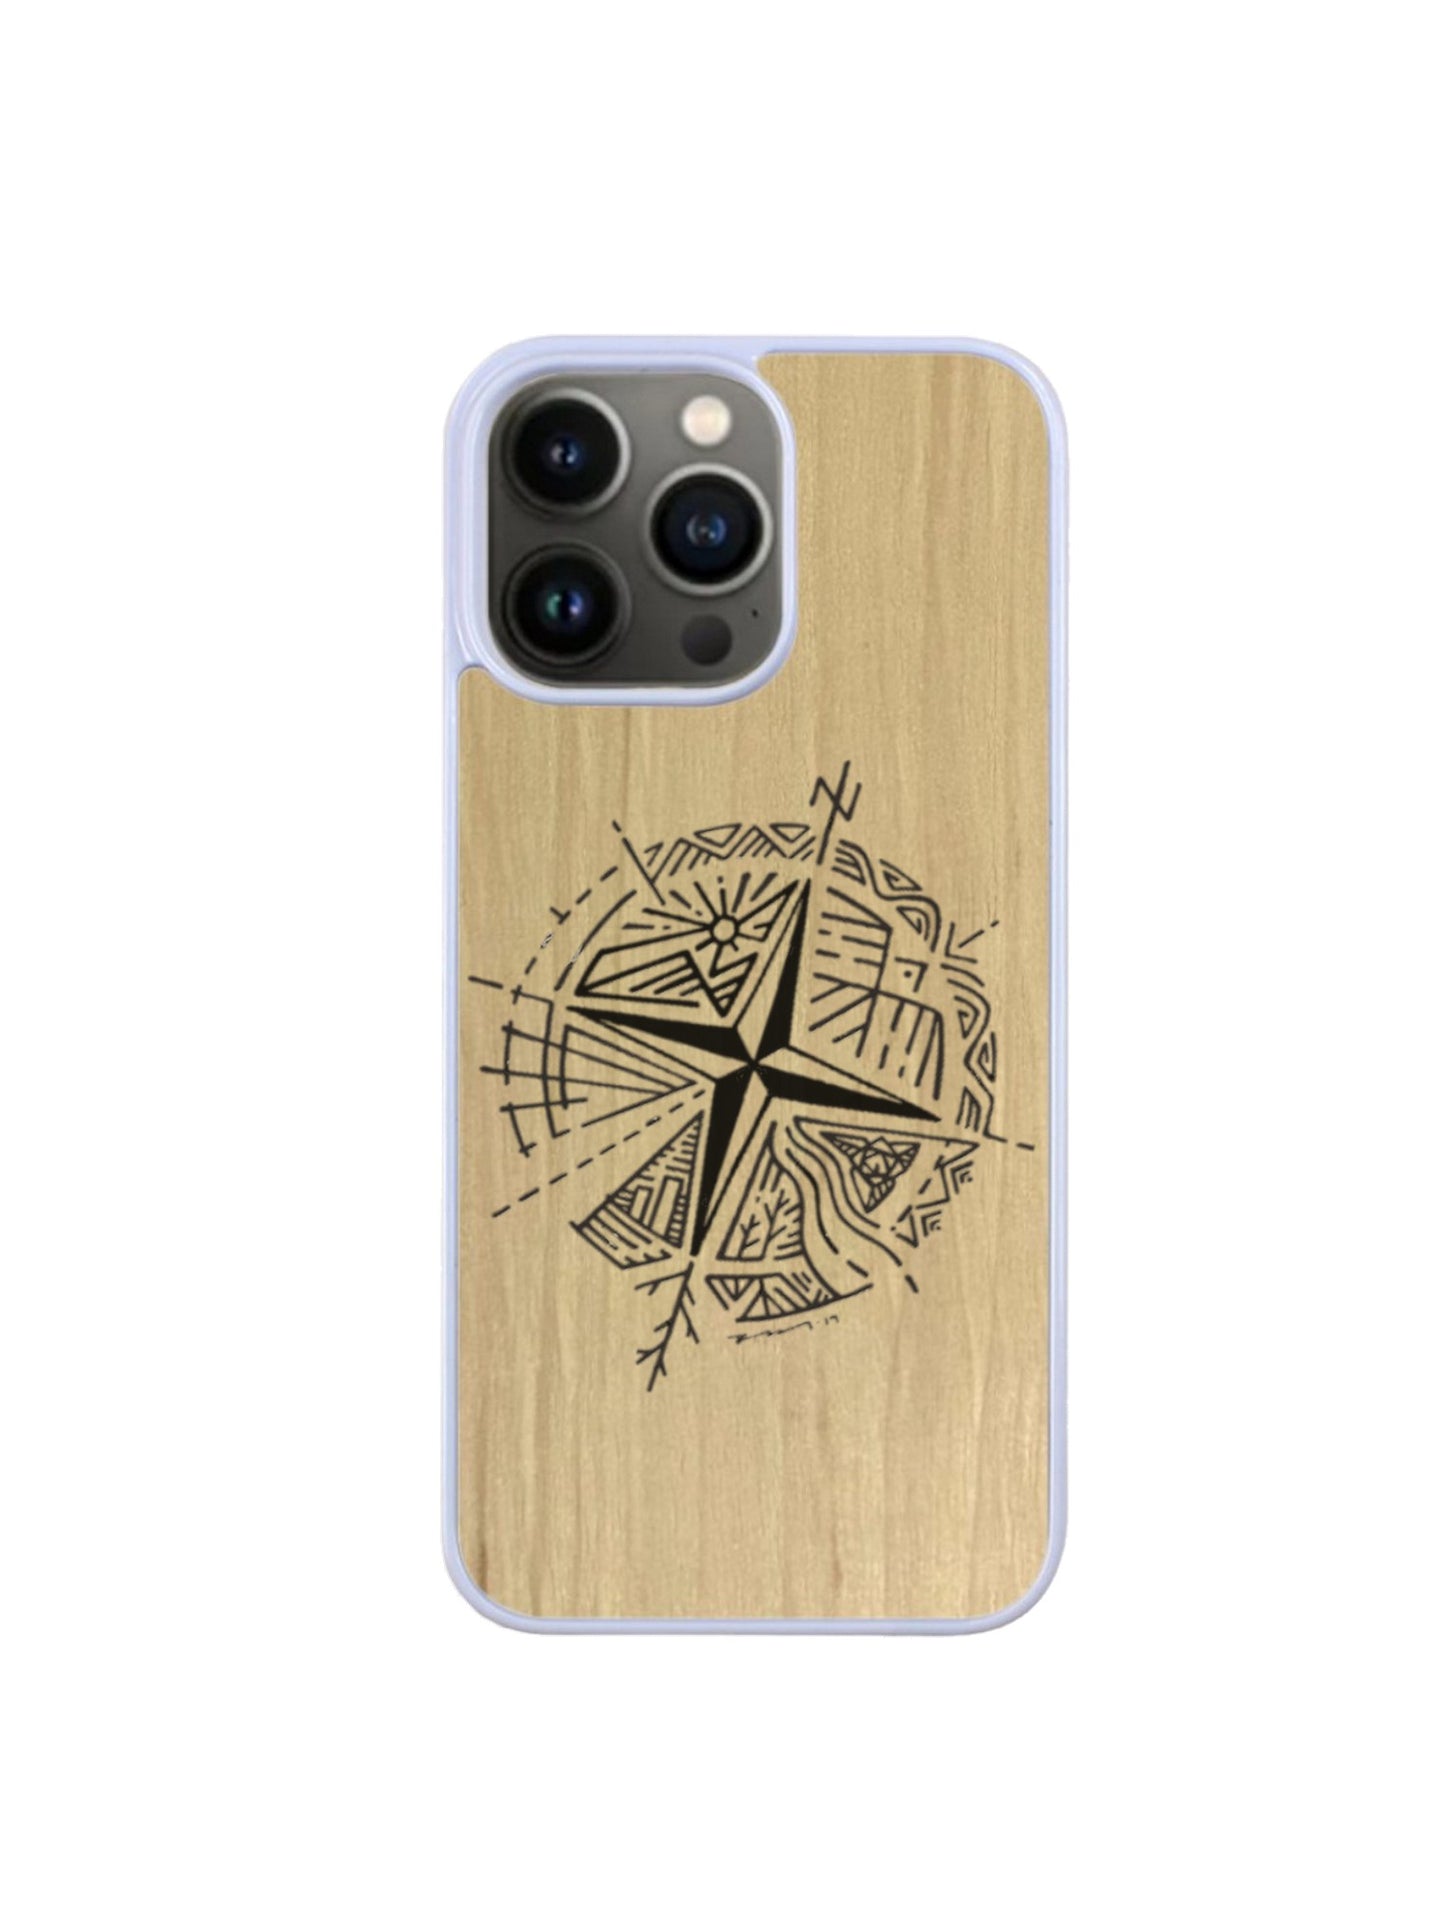 Iphone case - Compass rose